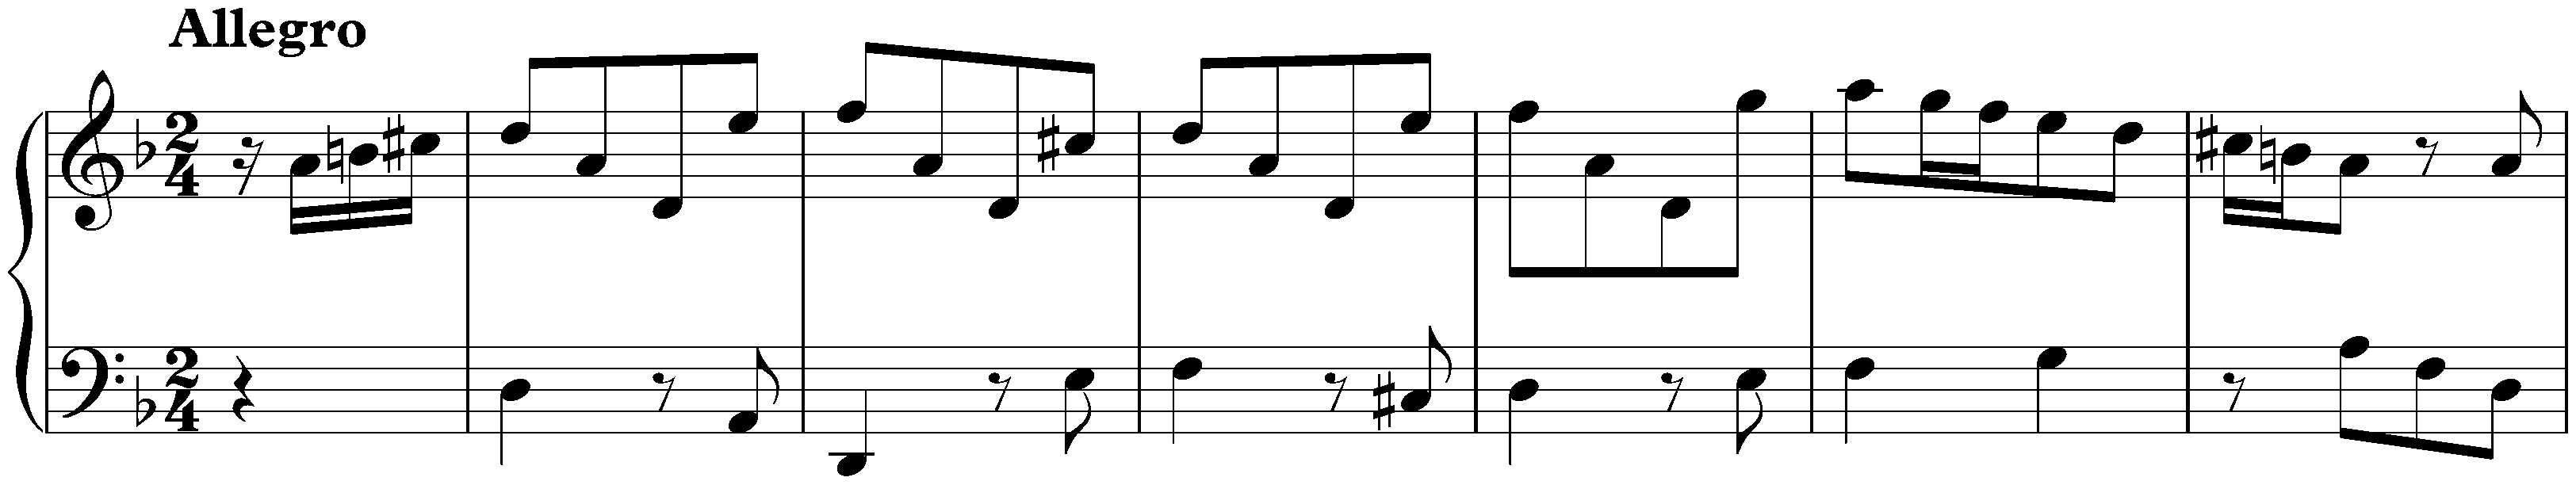 Sonata in D minor, K. 90; 2. Allegro